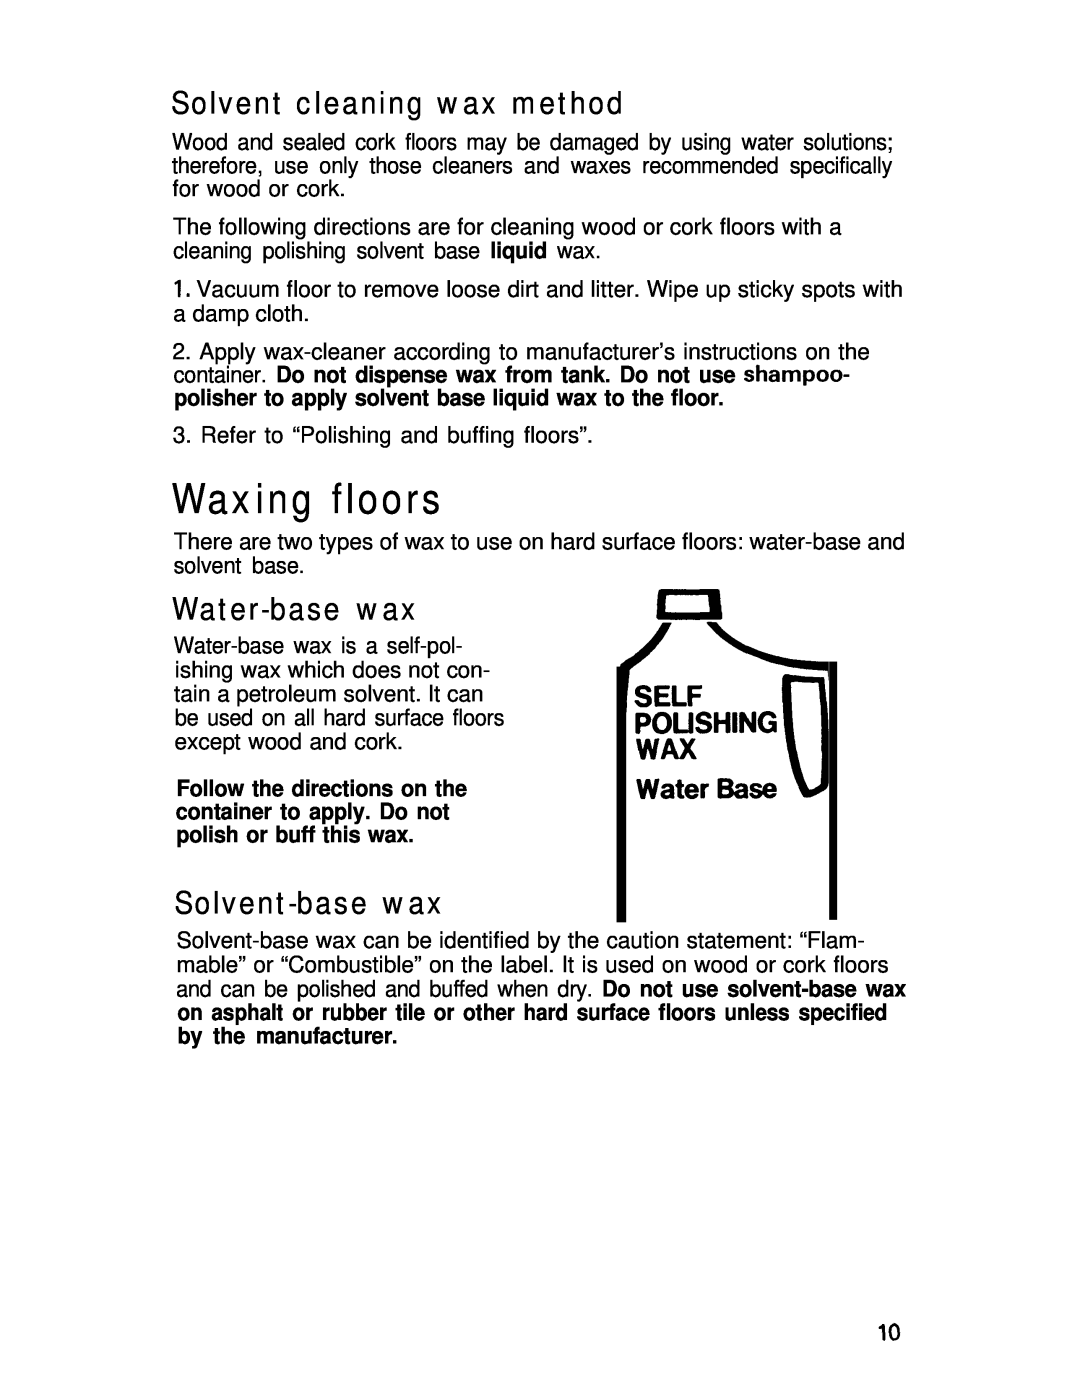 Hoover Shampoo- Polisher manual Waxing floors, Solvent cleaning wax method, Water-base wax, Solvent-base wax 